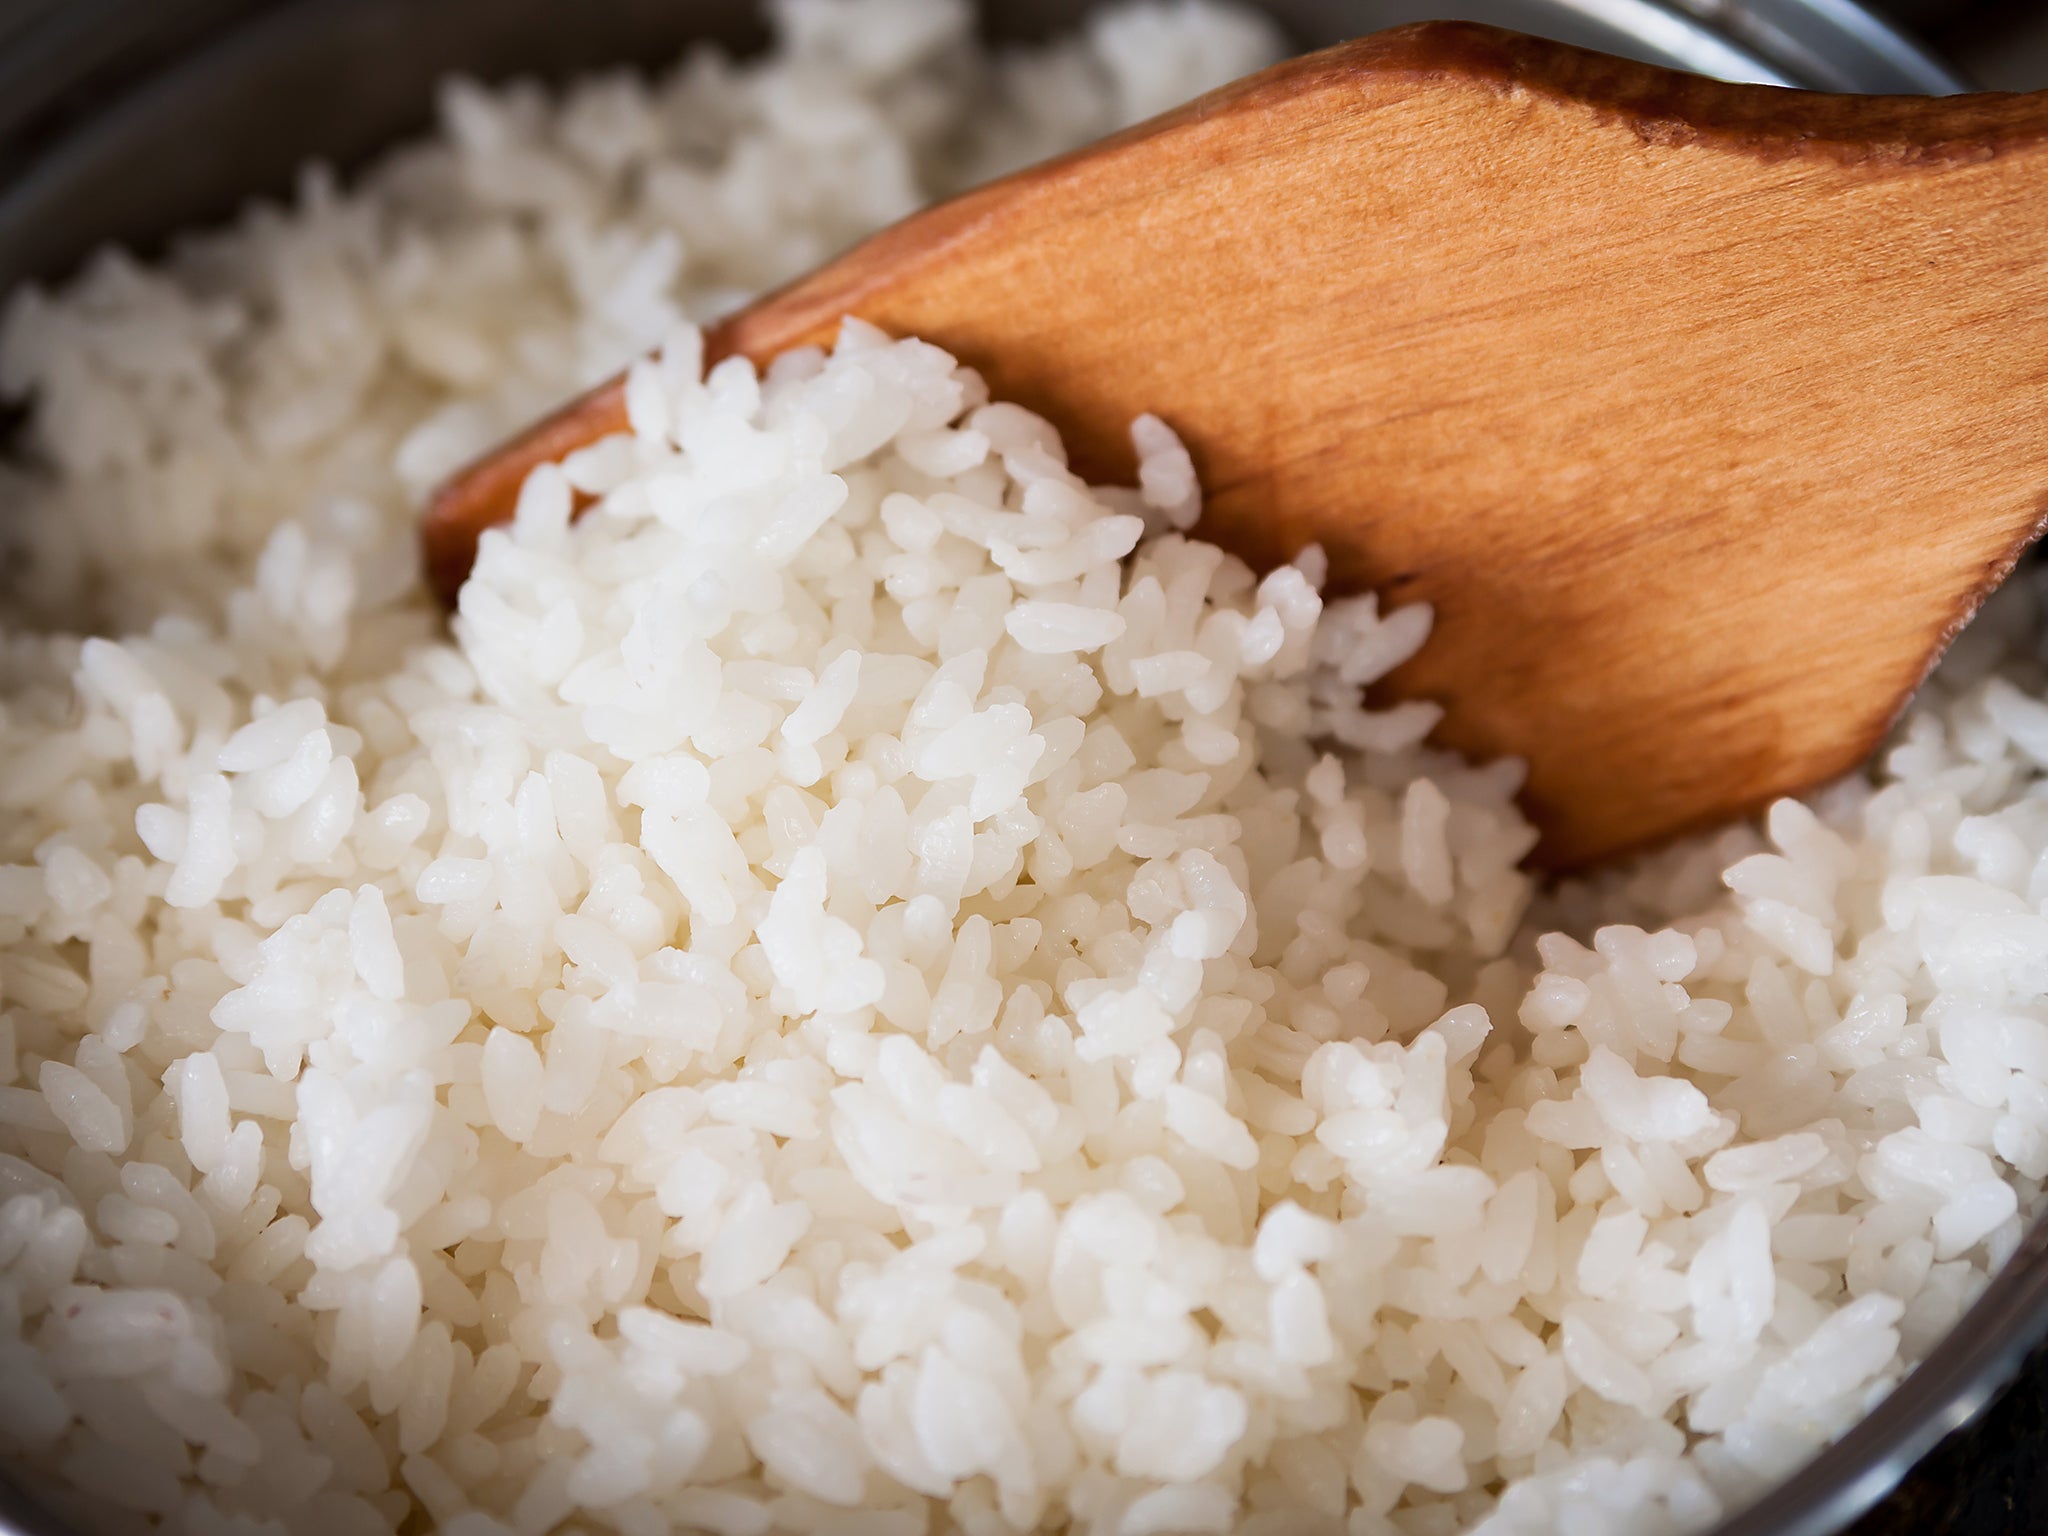 White rice in a metal pan